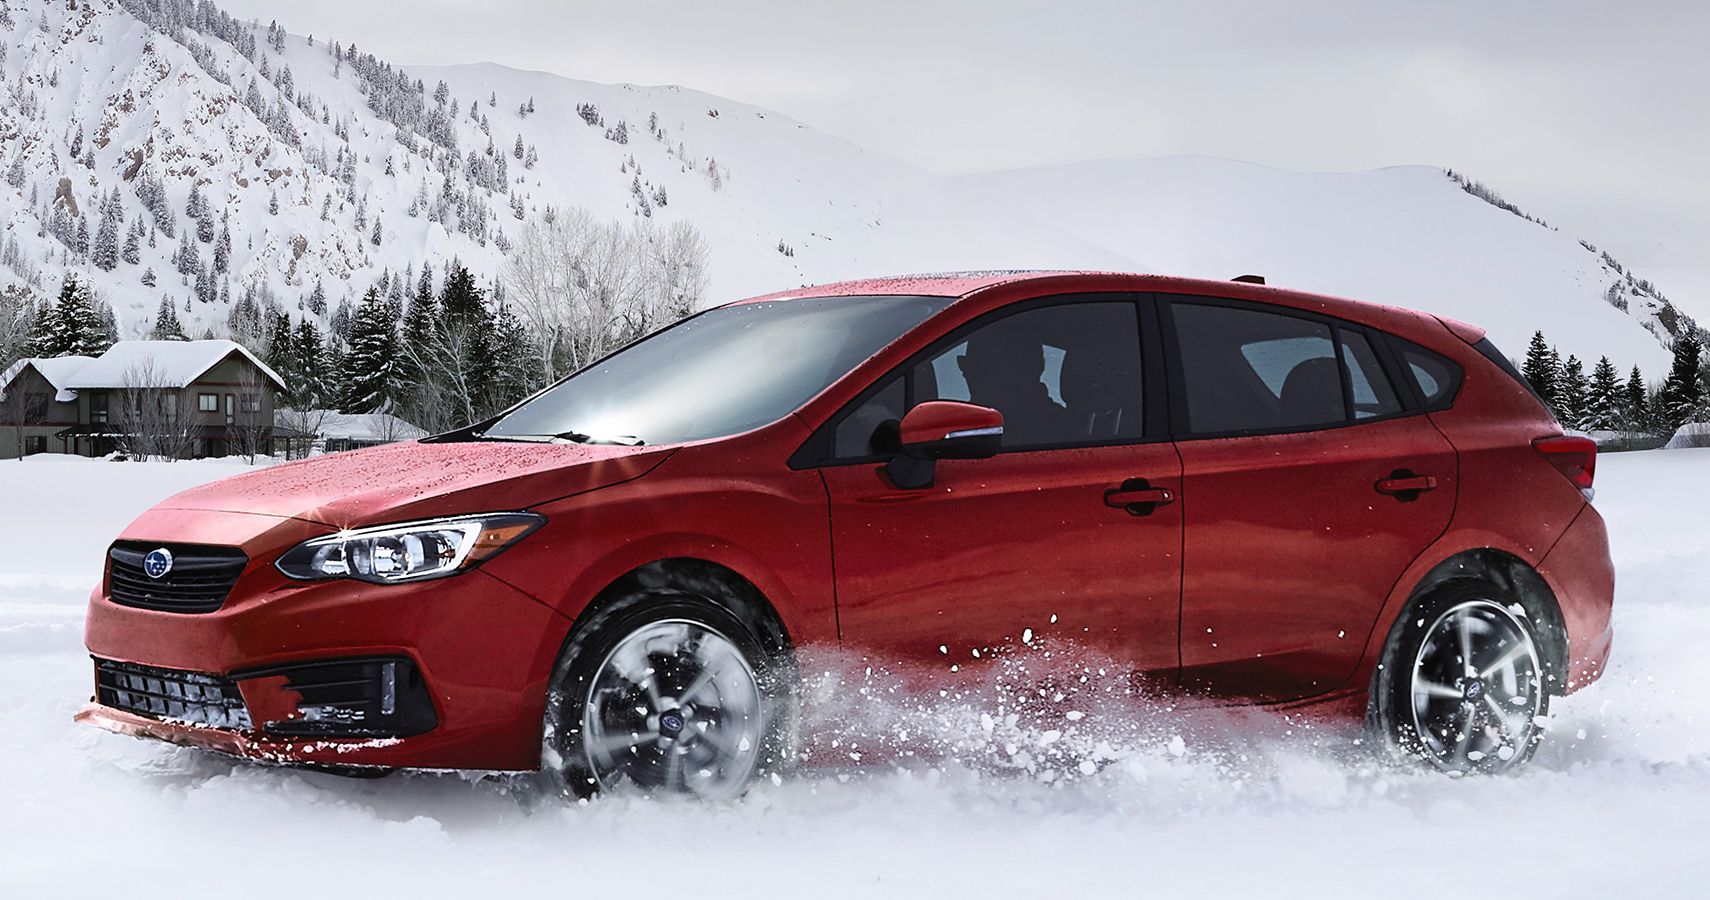 Subaru Impreza five-door snow